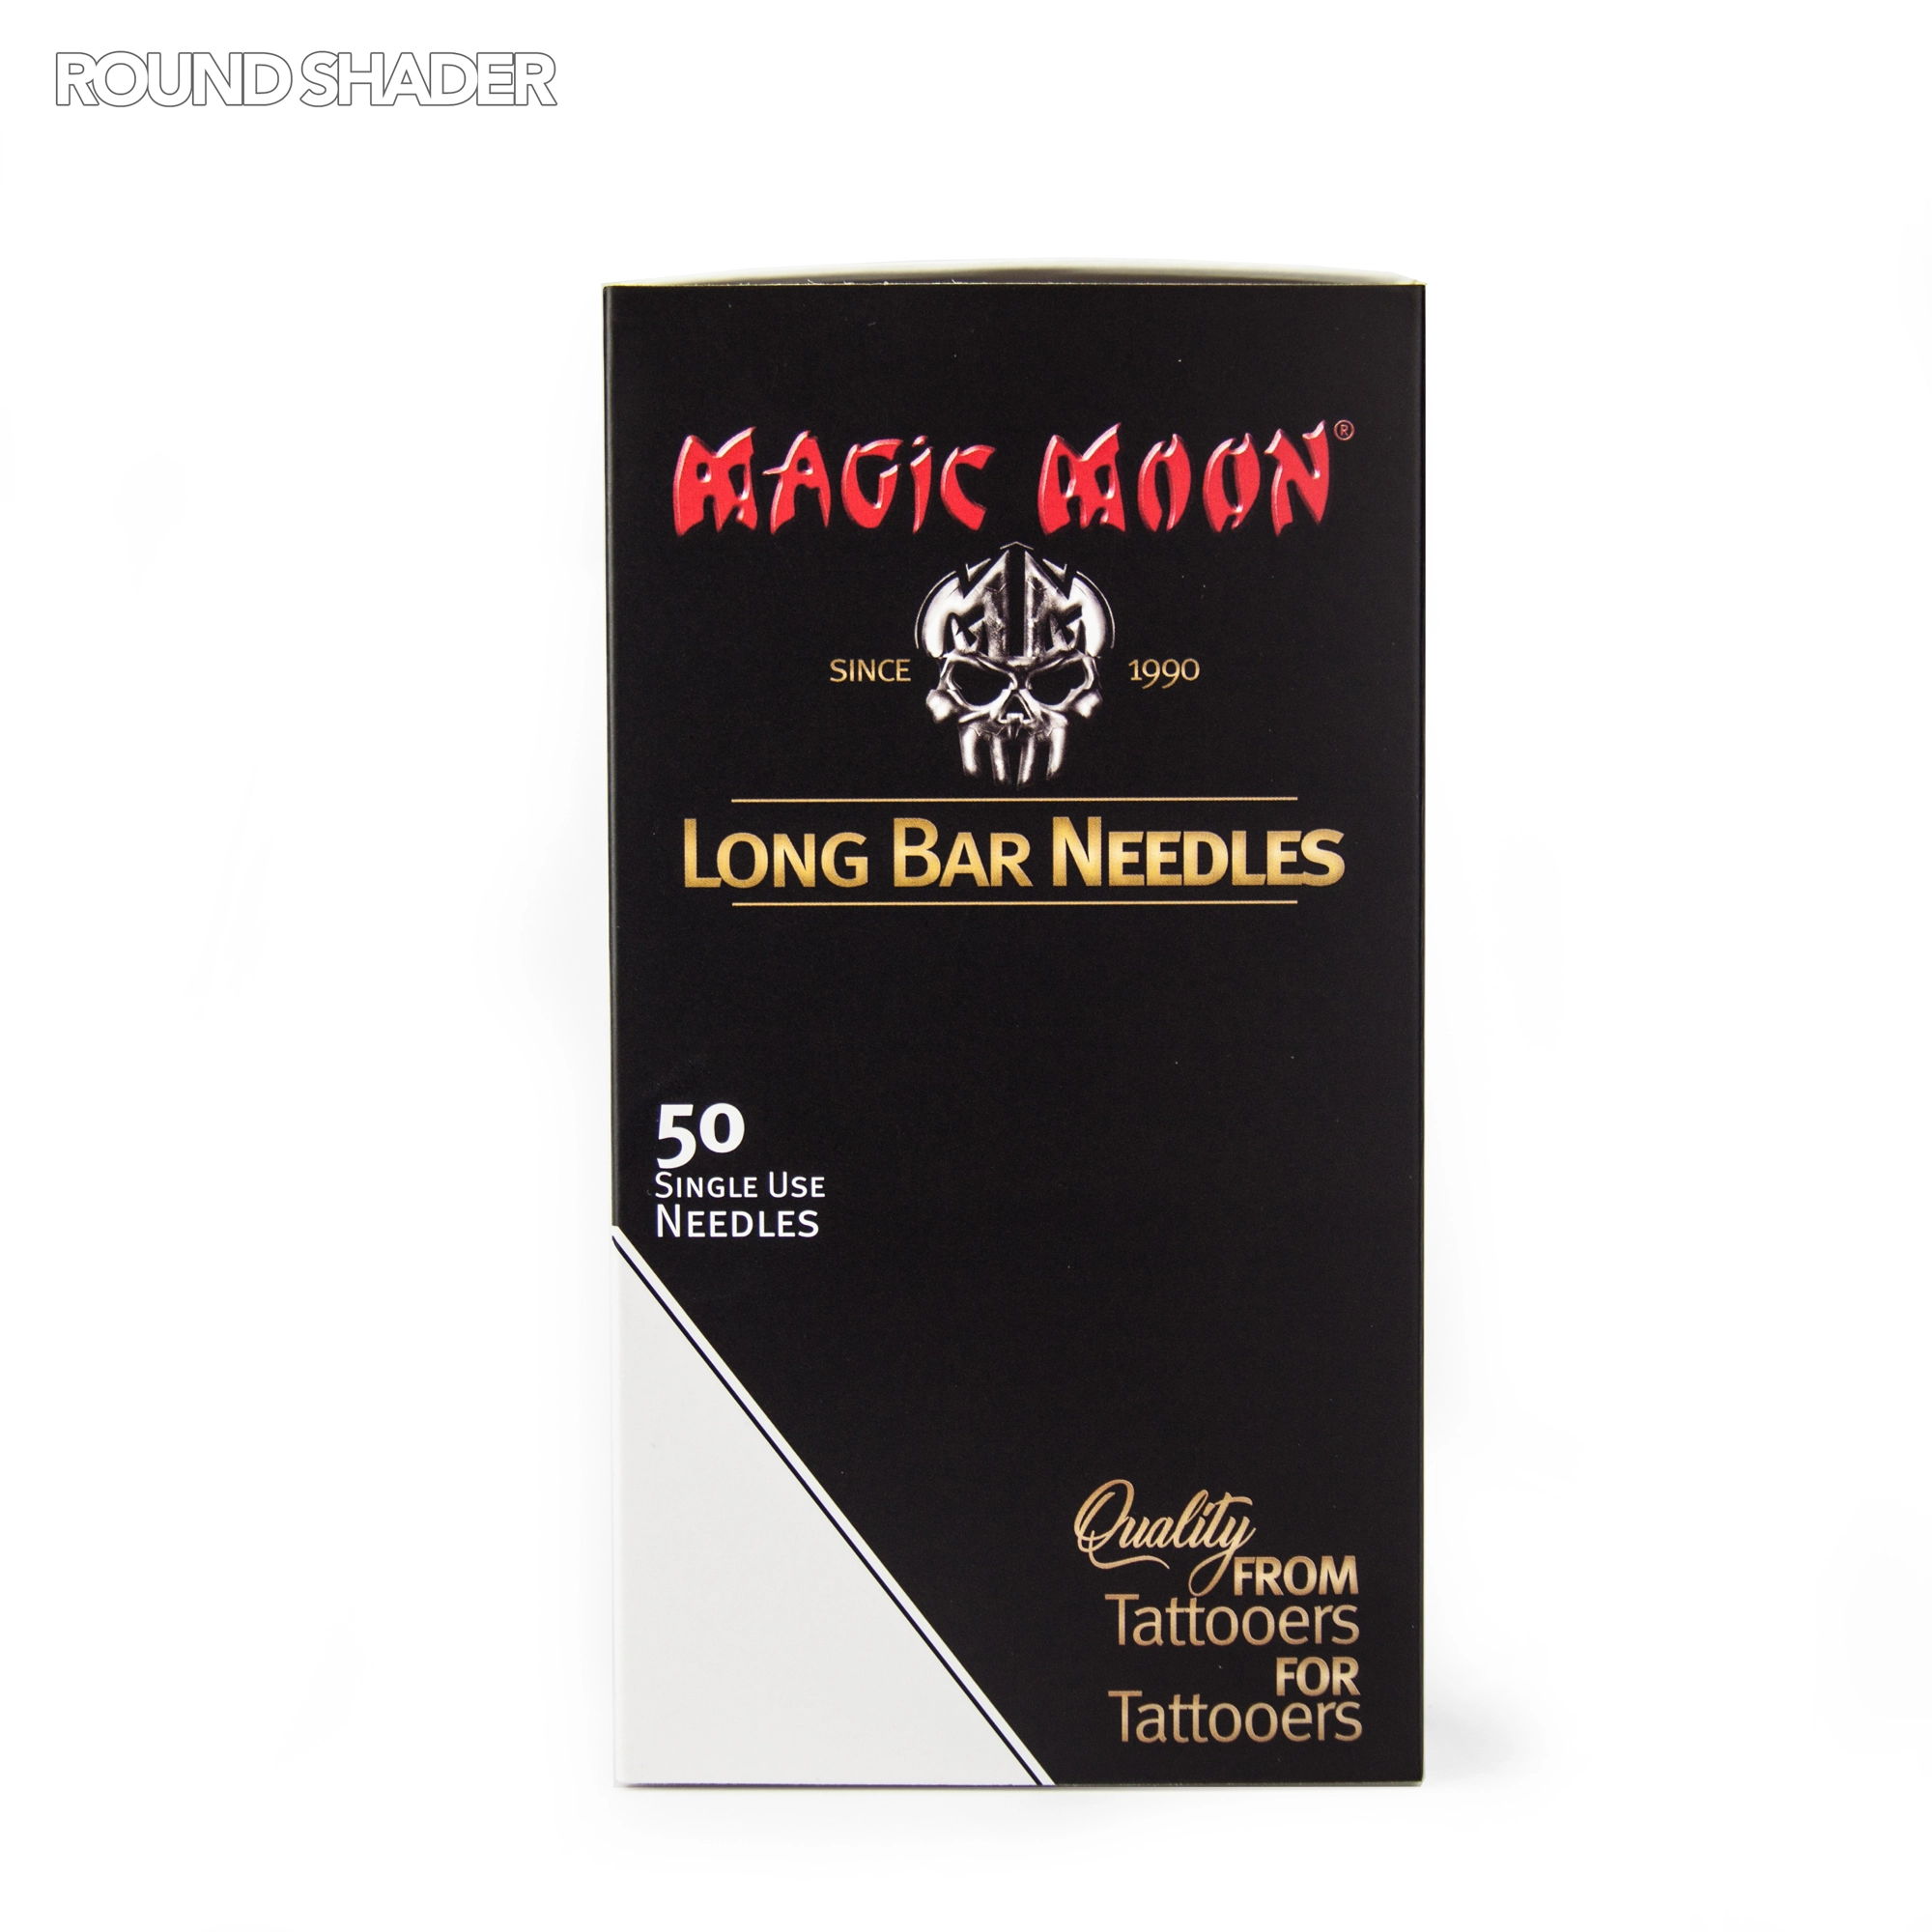 MAGIC MOON NEEDLES 50pcs 19RM 0,35mm Long taper